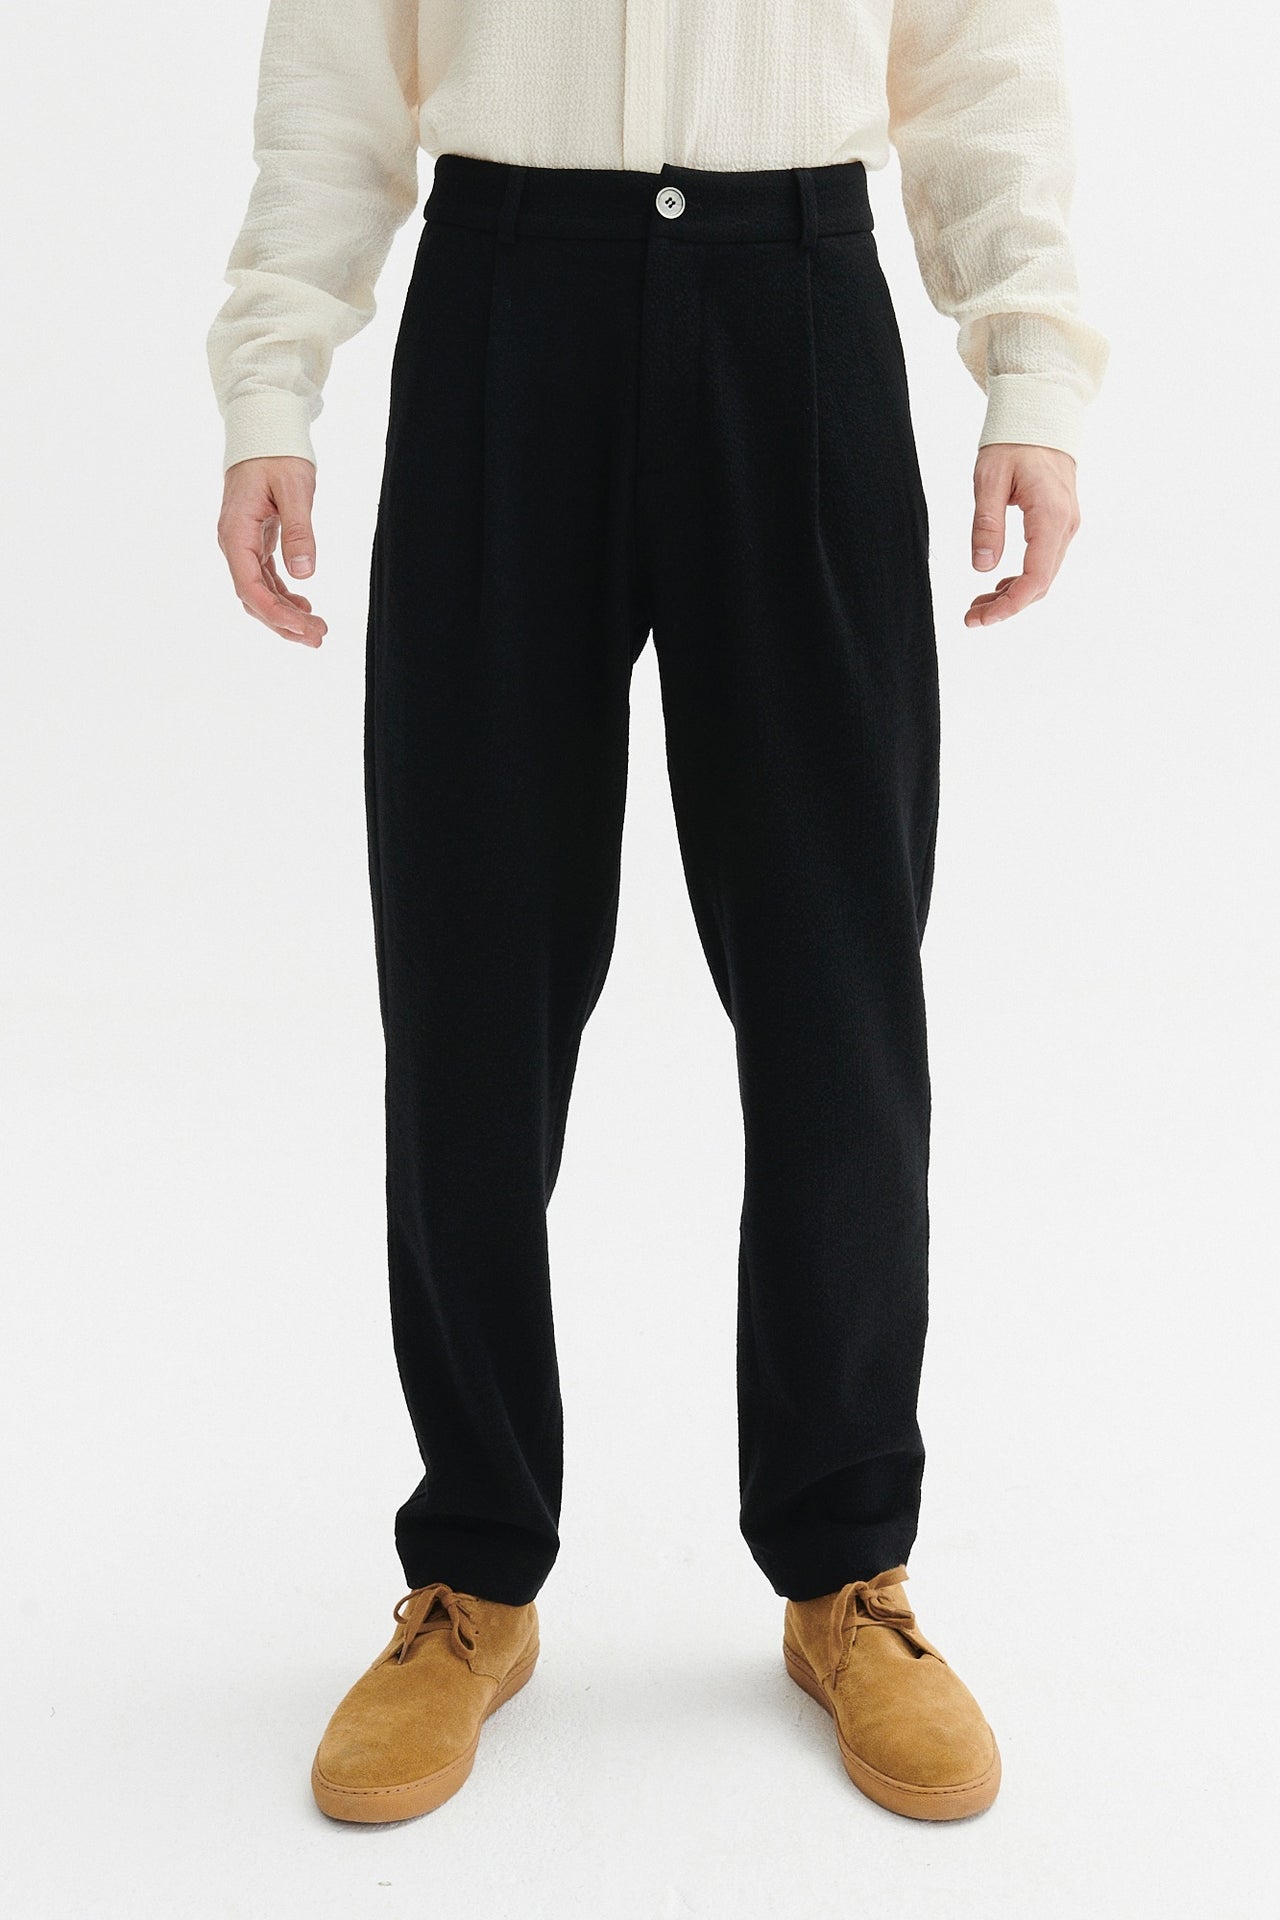 Genuine Trousers in a Black Italian Virgin Wool and Cotton Seersucker by Subalpino